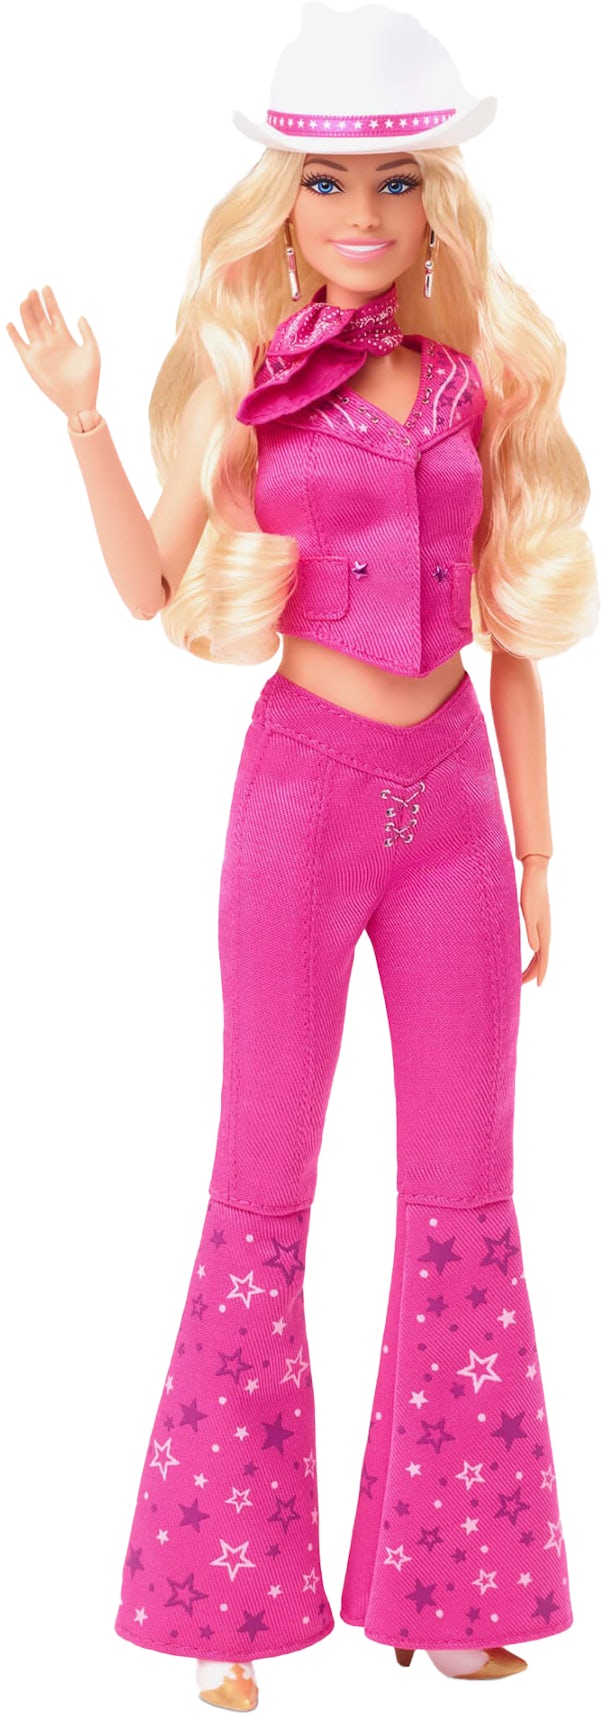 Pink Doll: Barbie Quero Ser